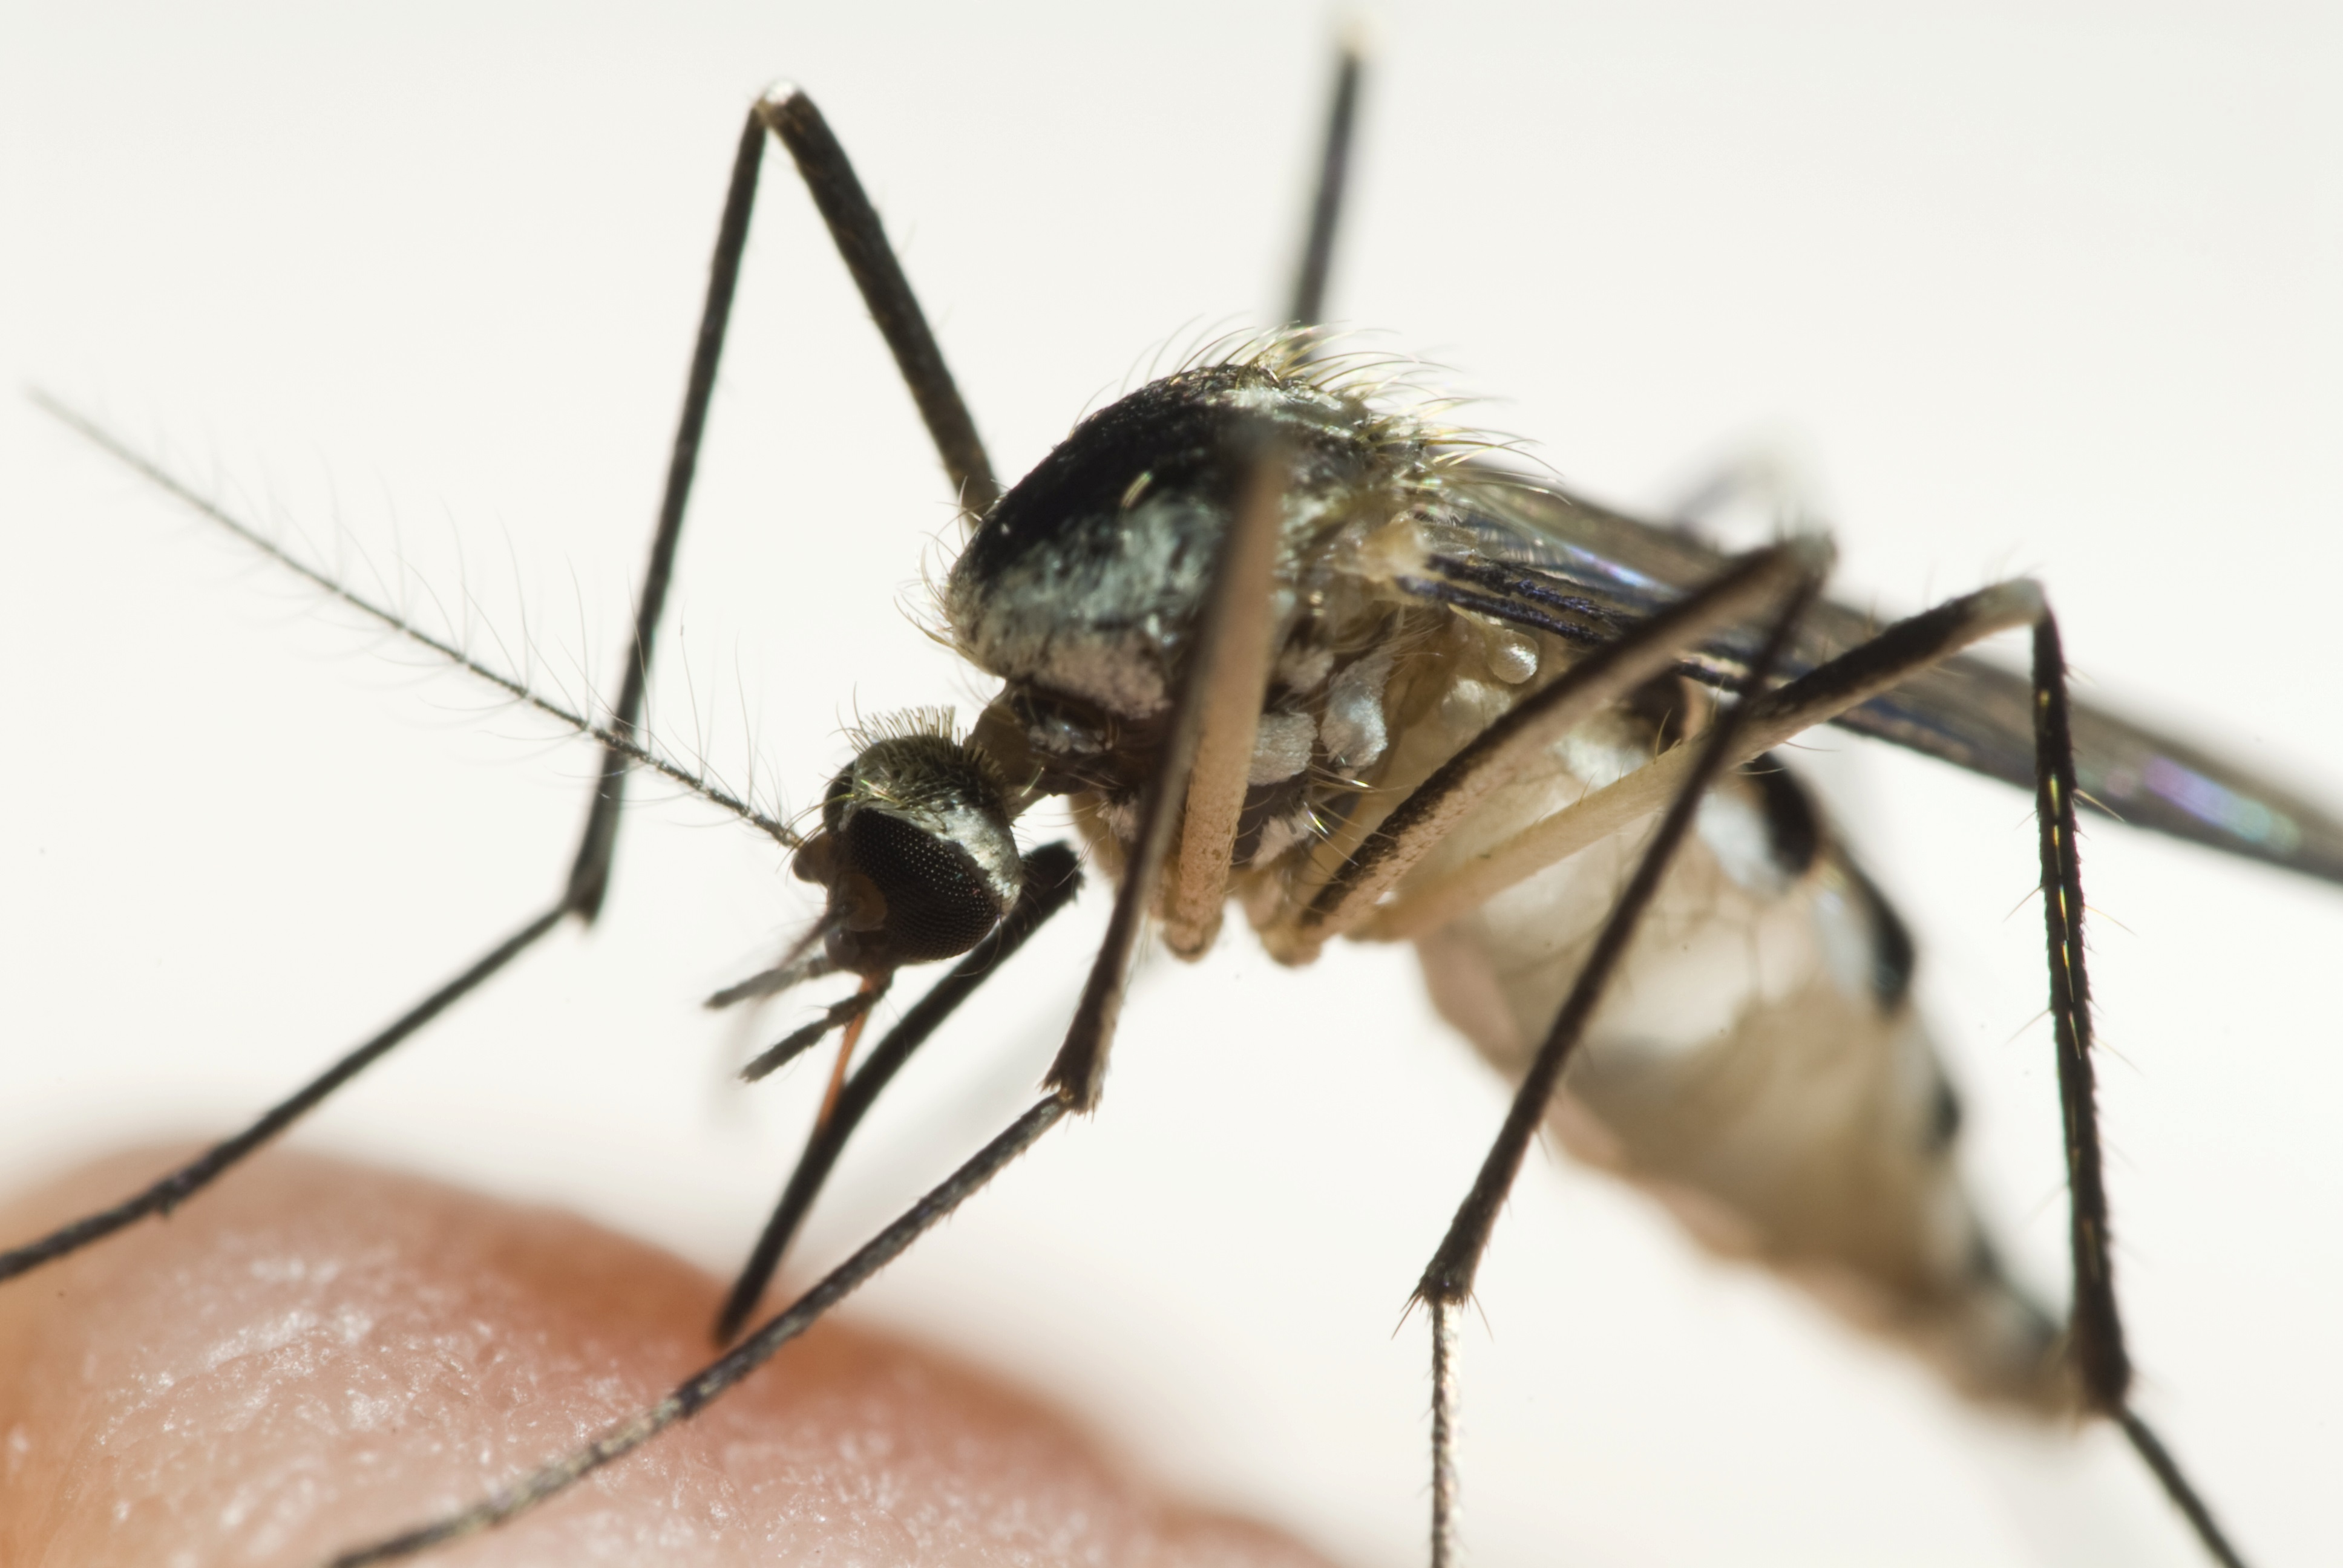 An Aedes triseriatus mosquito found prior to providing Mosquito Control in Hamilton.